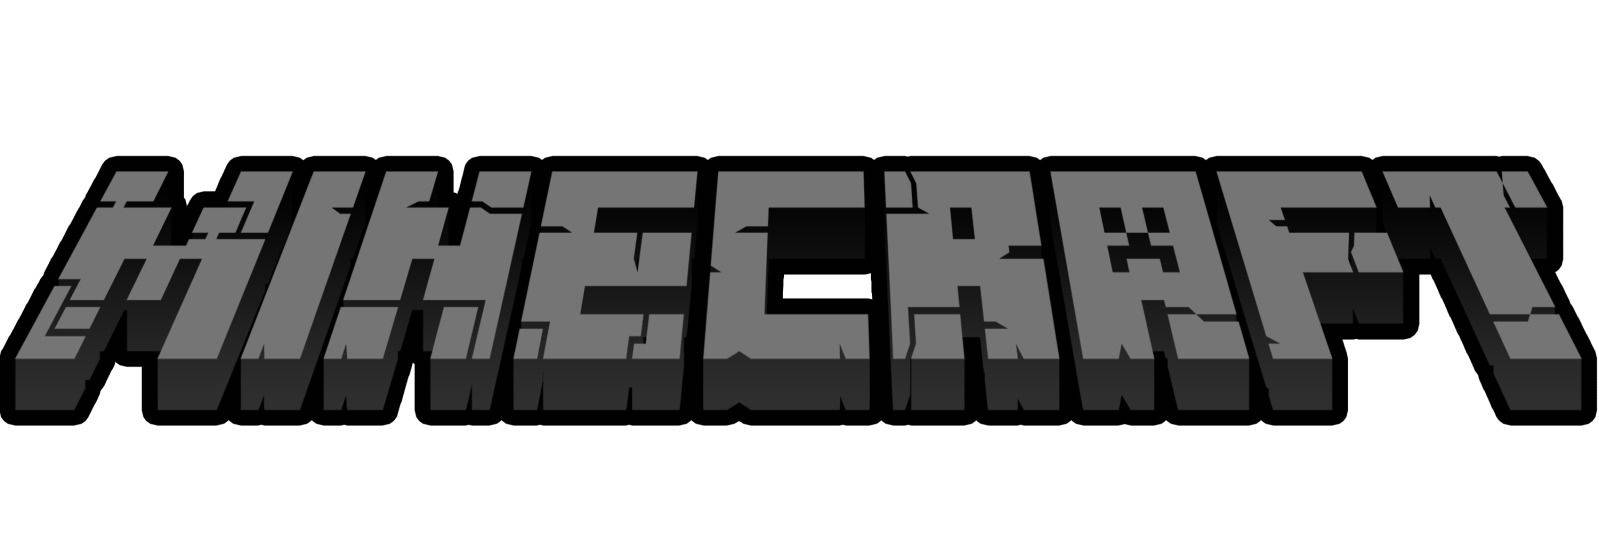 Simple Minecraft Logo Wallpaper